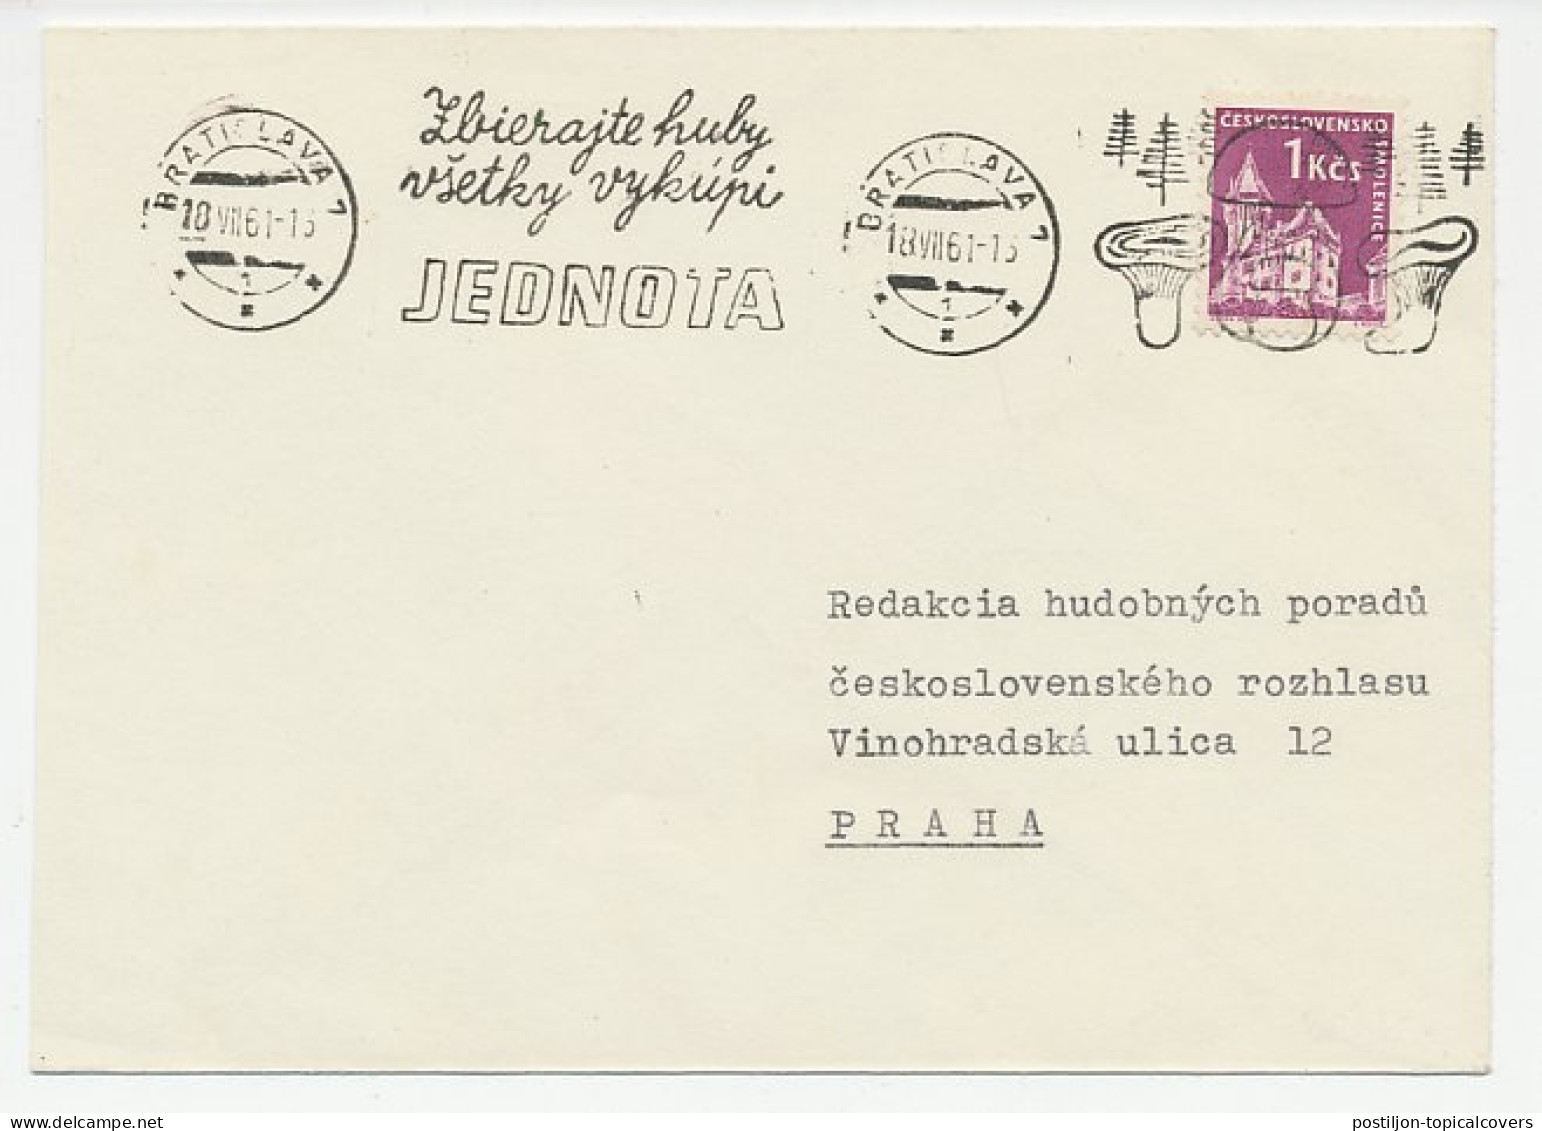 Cover / Postmark Czechoslovakia1961 Collect Mushrooms - Funghi